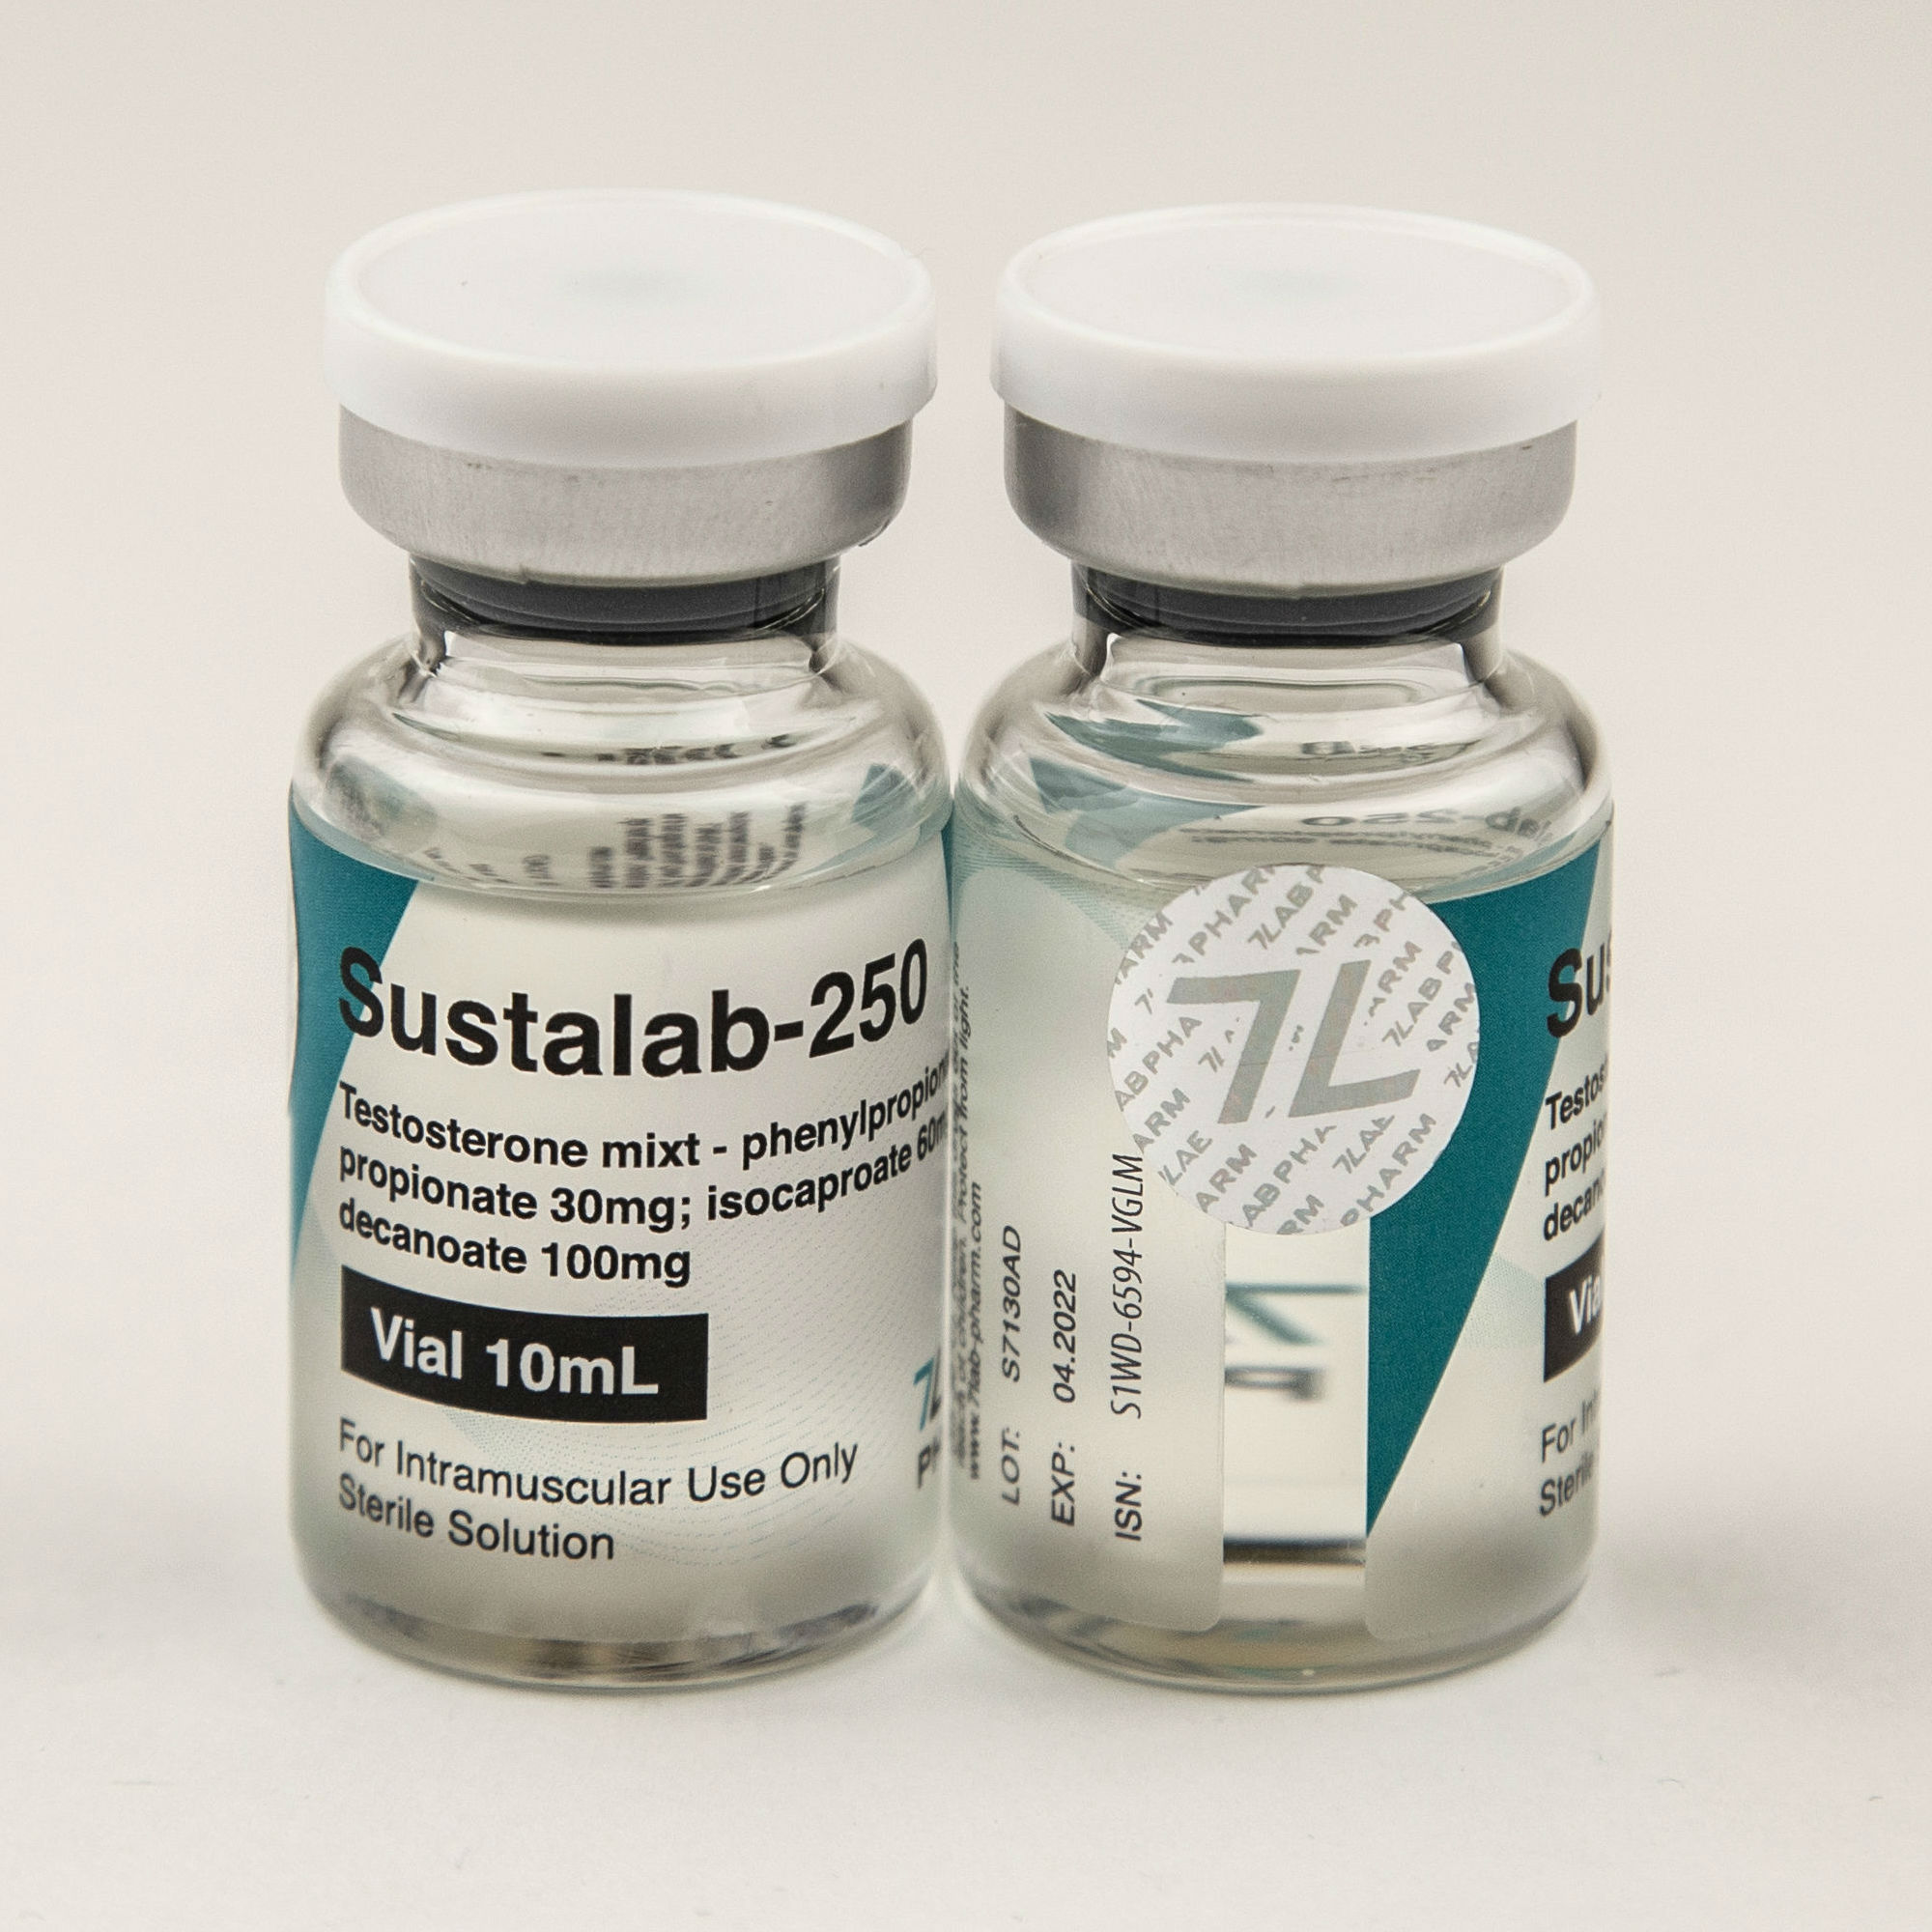 Sustalab-250 (Testosterone Mix) by 7Lab Pharma